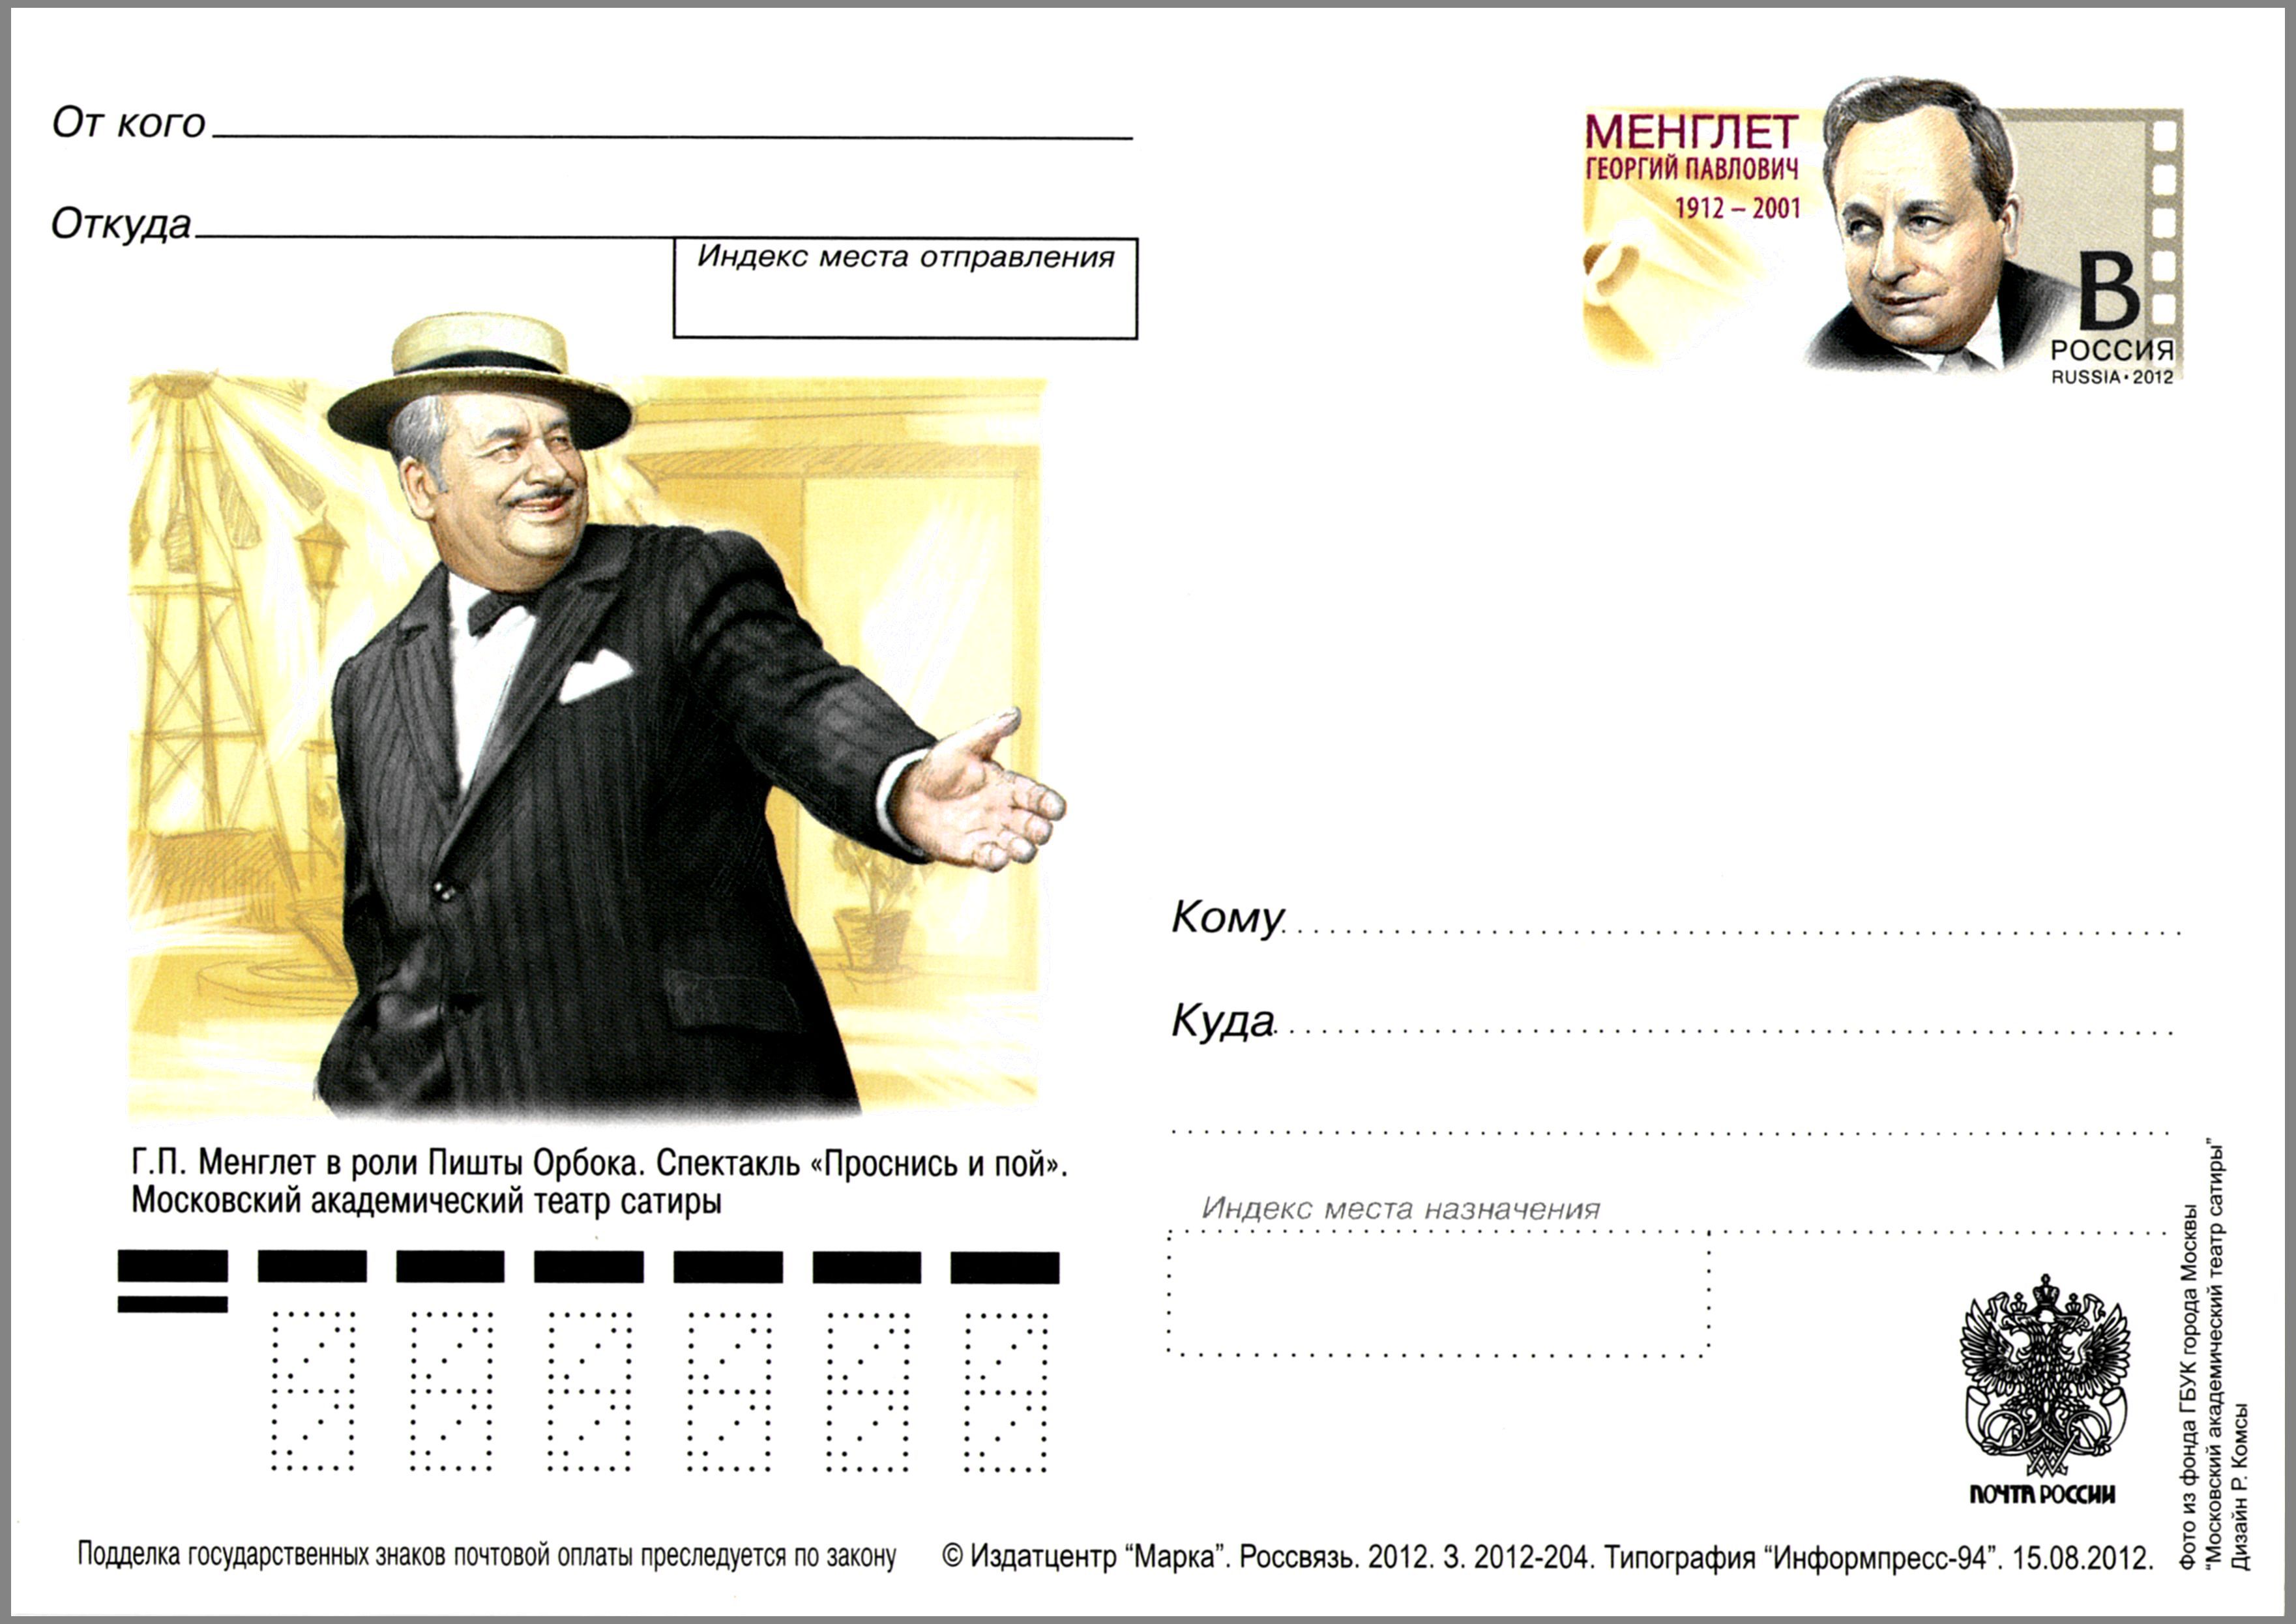 Georgy Menglet Postal card Russia 2012